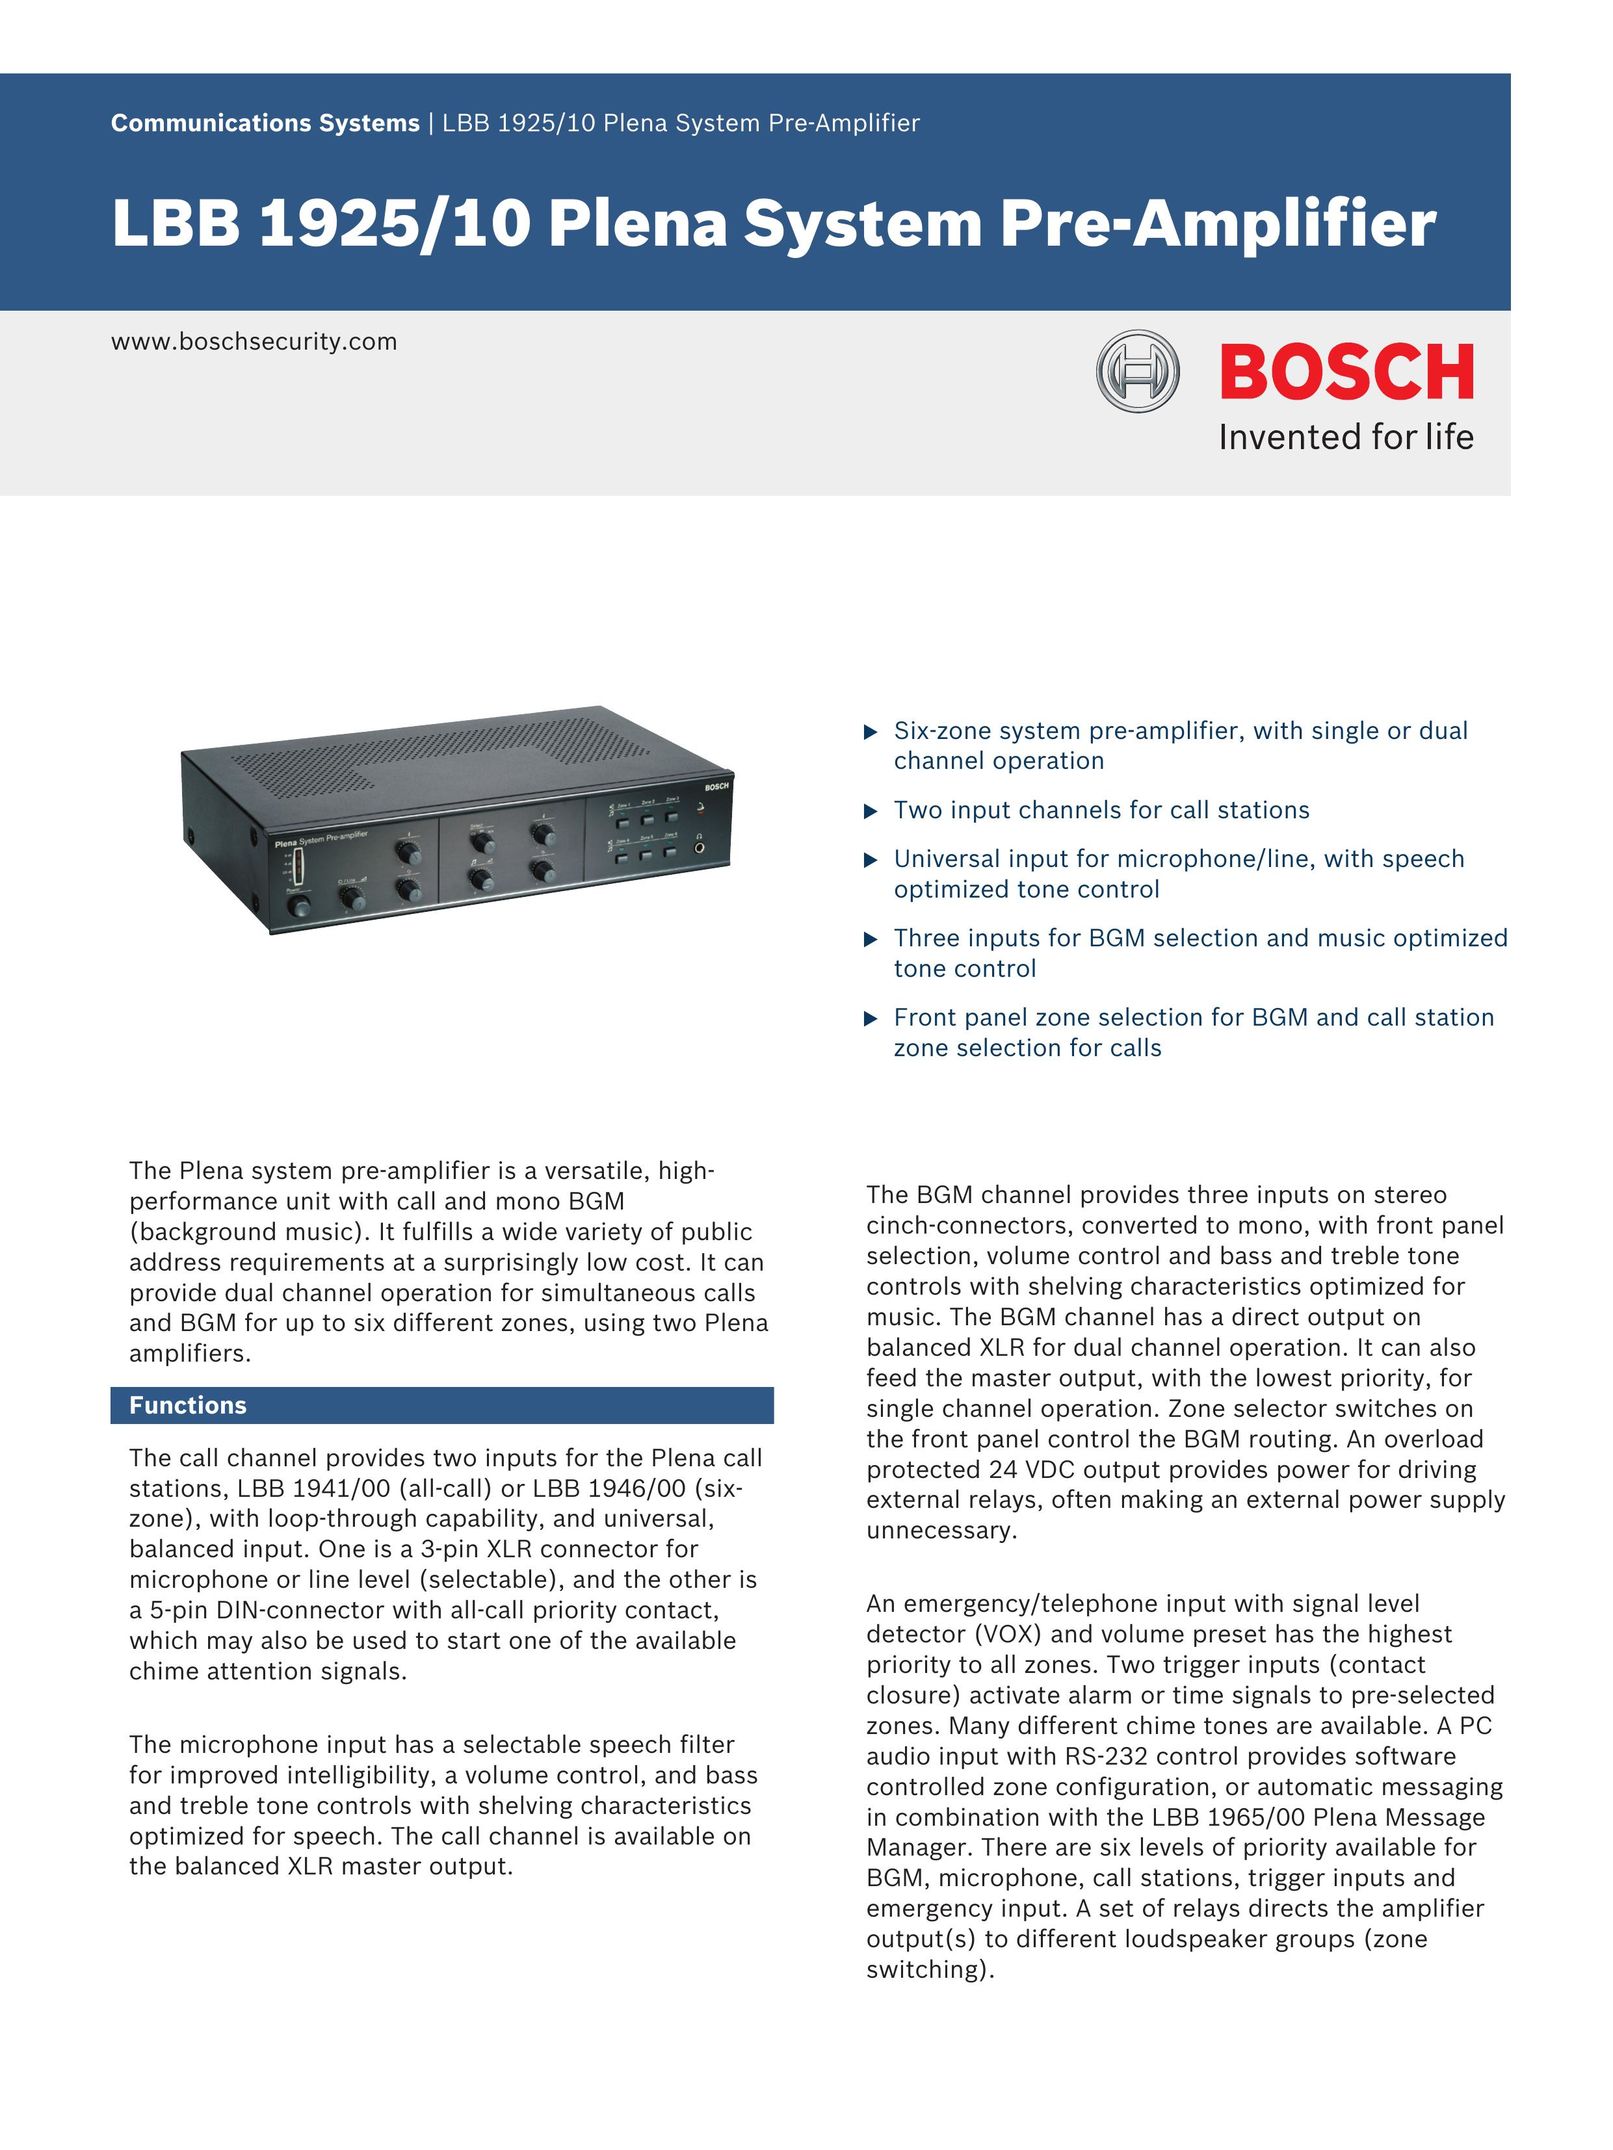 Bosch Appliances LBB 1925/10 Stereo Amplifier User Manual